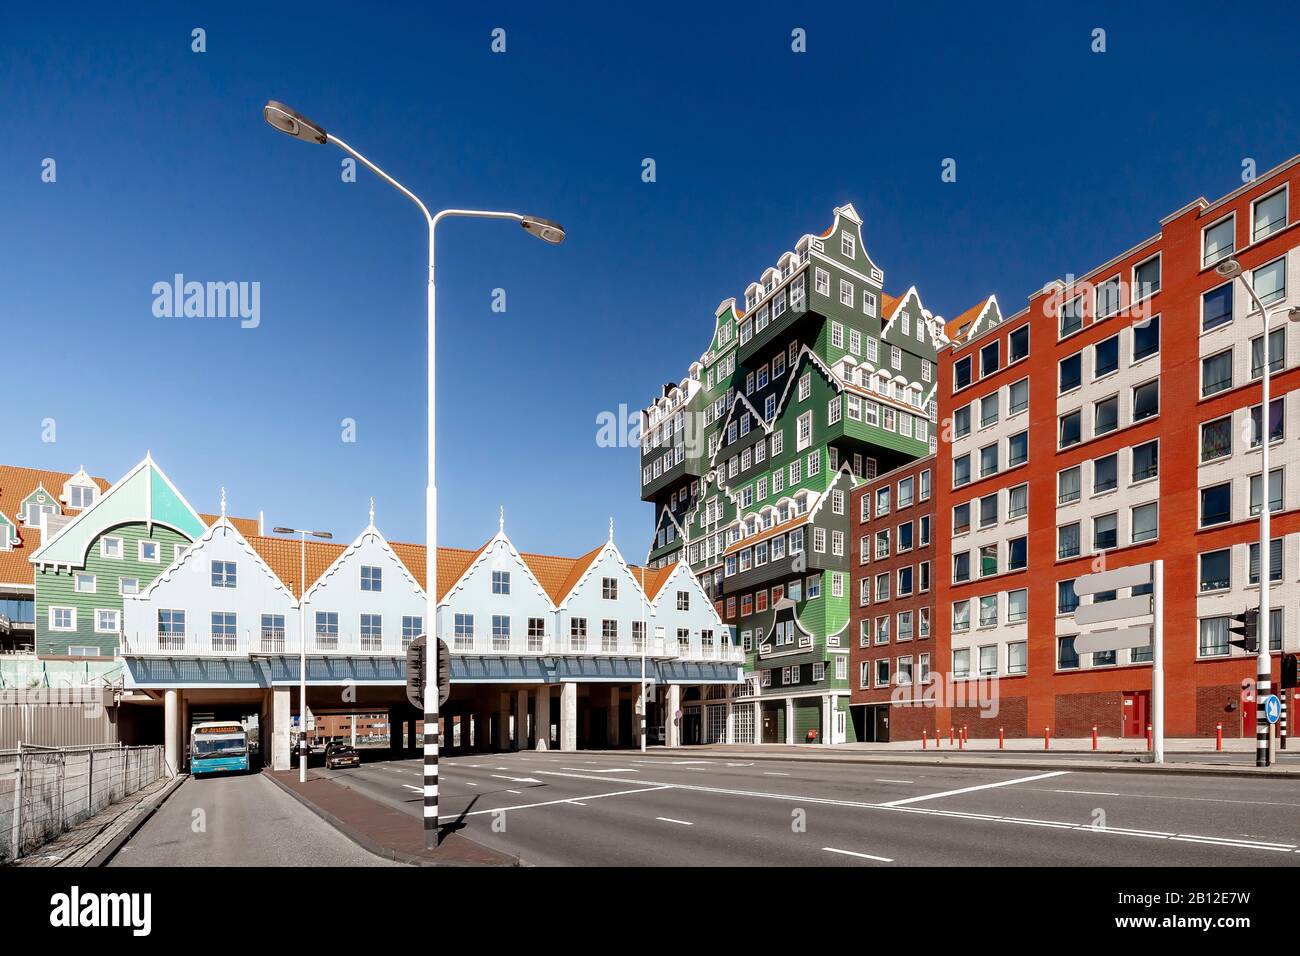 Hotel with exceptional architecture in Zaandam near Amsterdam, Netherlands Stock Photo